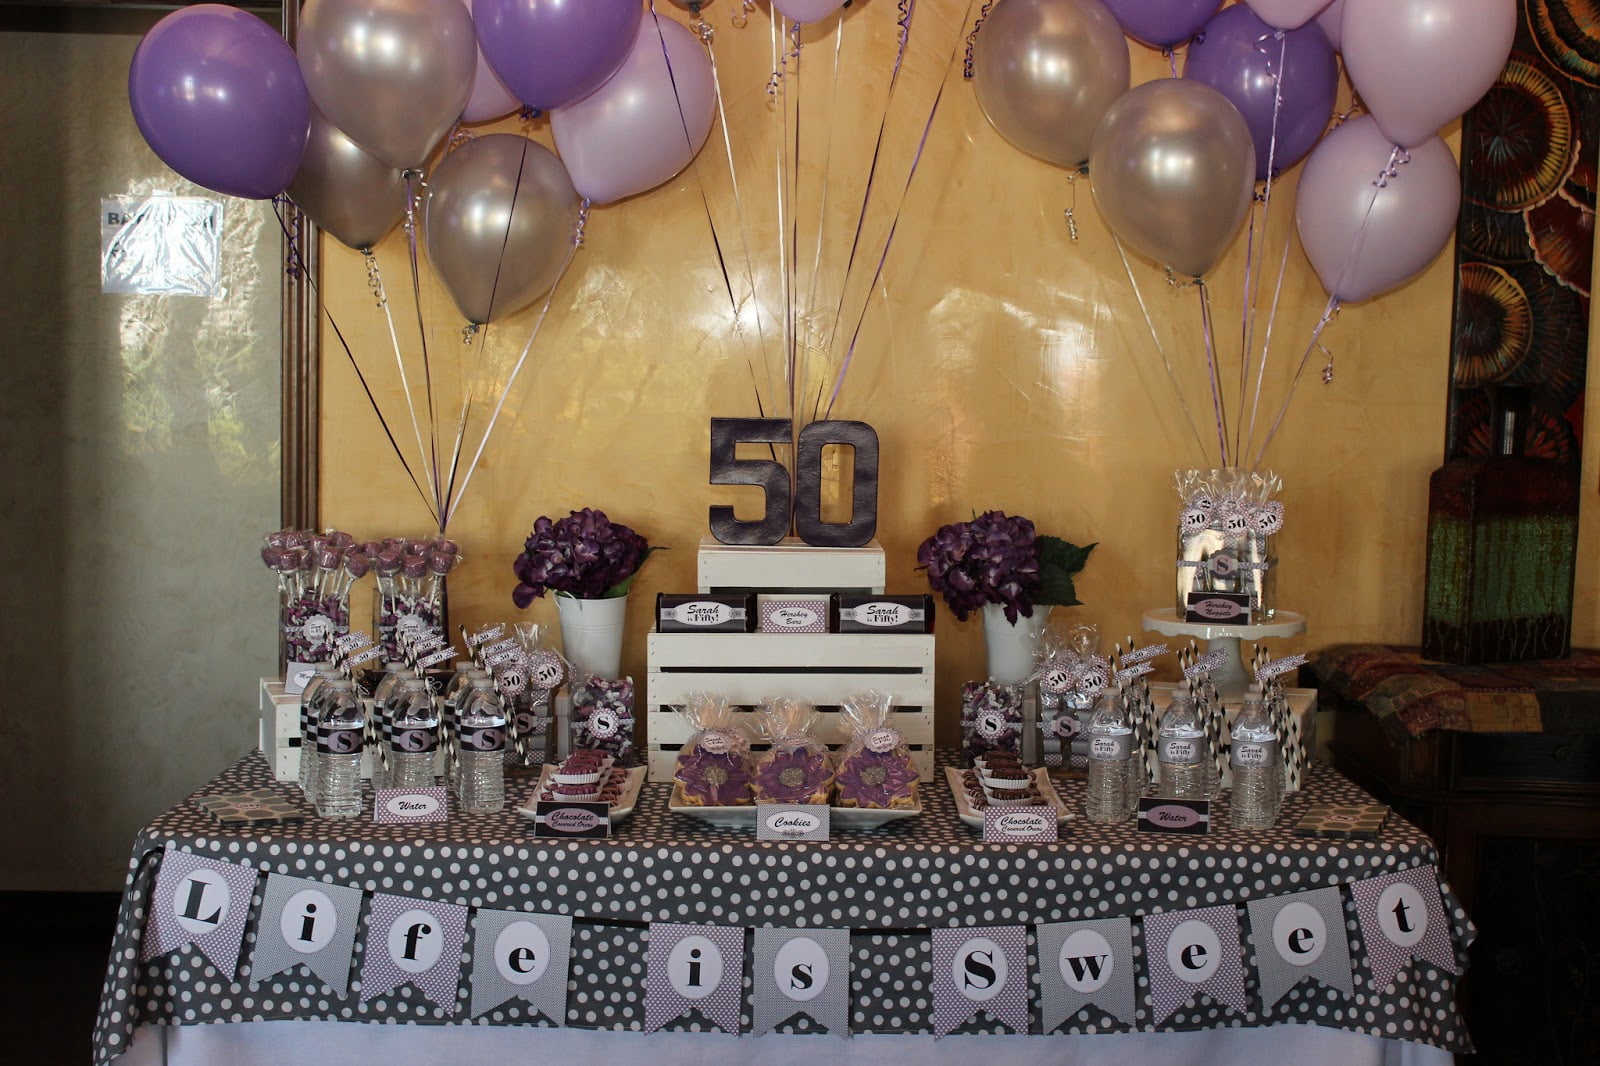 50 years old birthday party invitations celebration